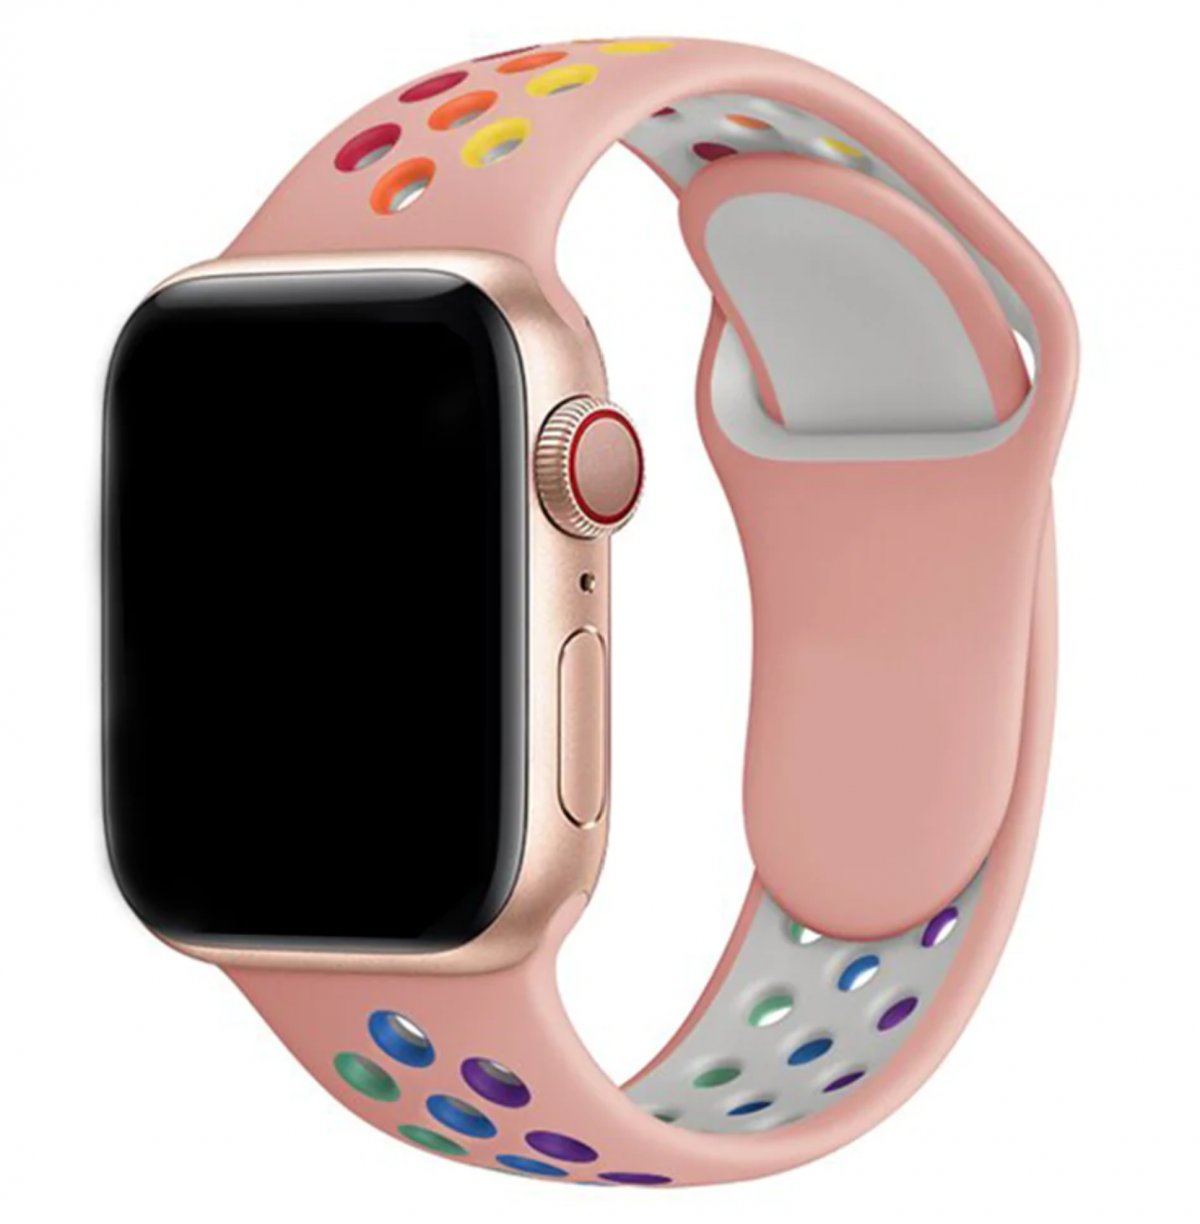 Řemínek SPORT pro Apple Watch Series 1/2/3 (42mm) - Pink Oxford/Rainbow